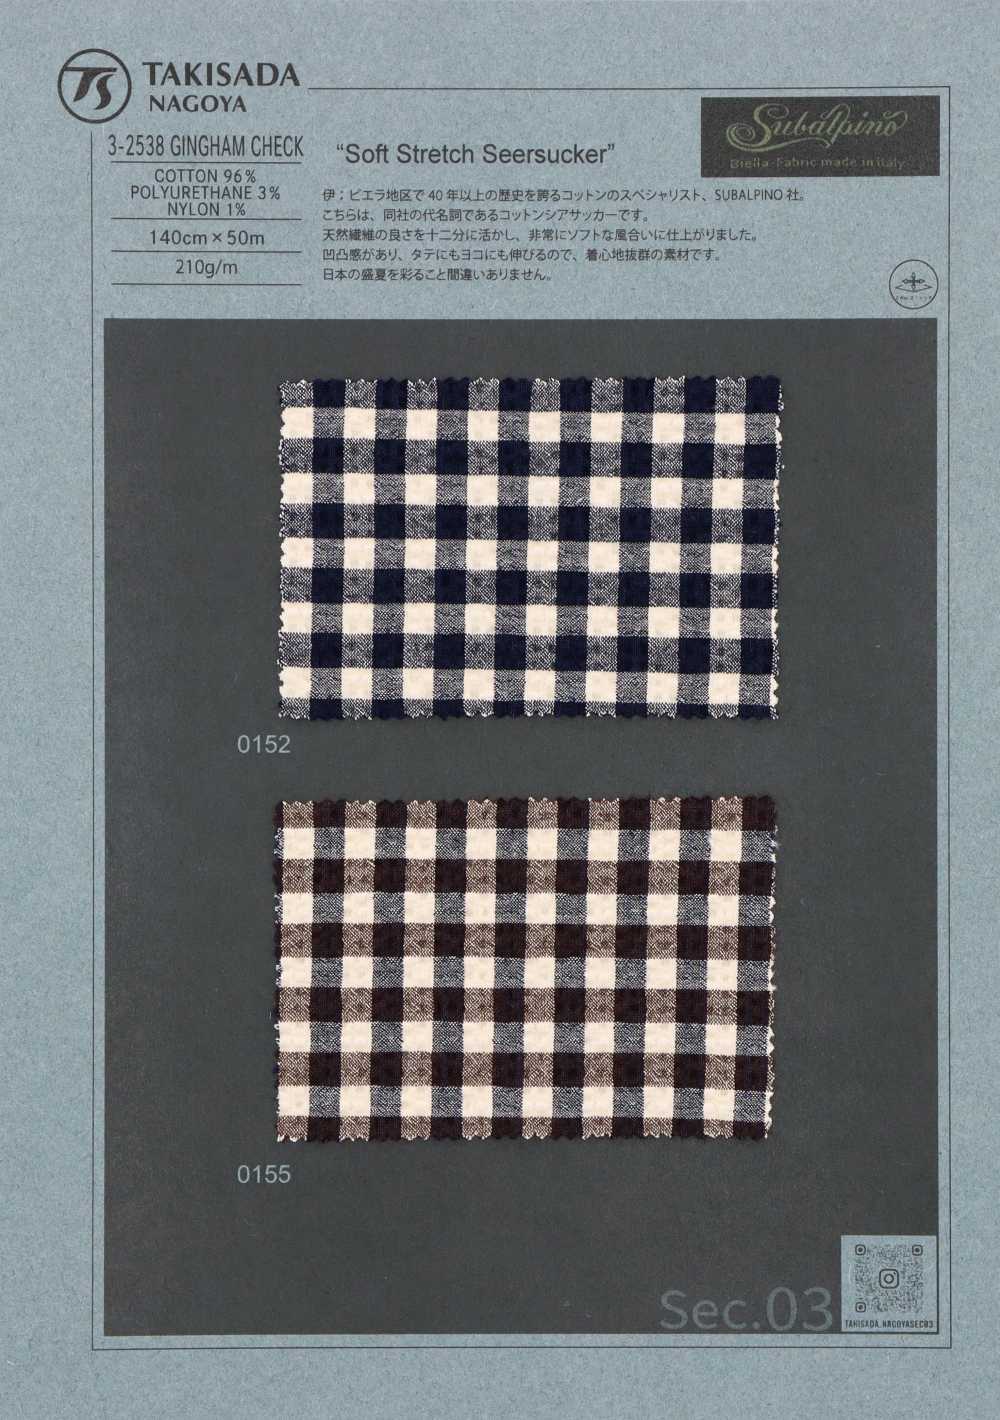 3-2538GINGHAM CHECK SUBALPINO Shear Seersucker Karomuster[Textilgewebe] Takisada Nagoya